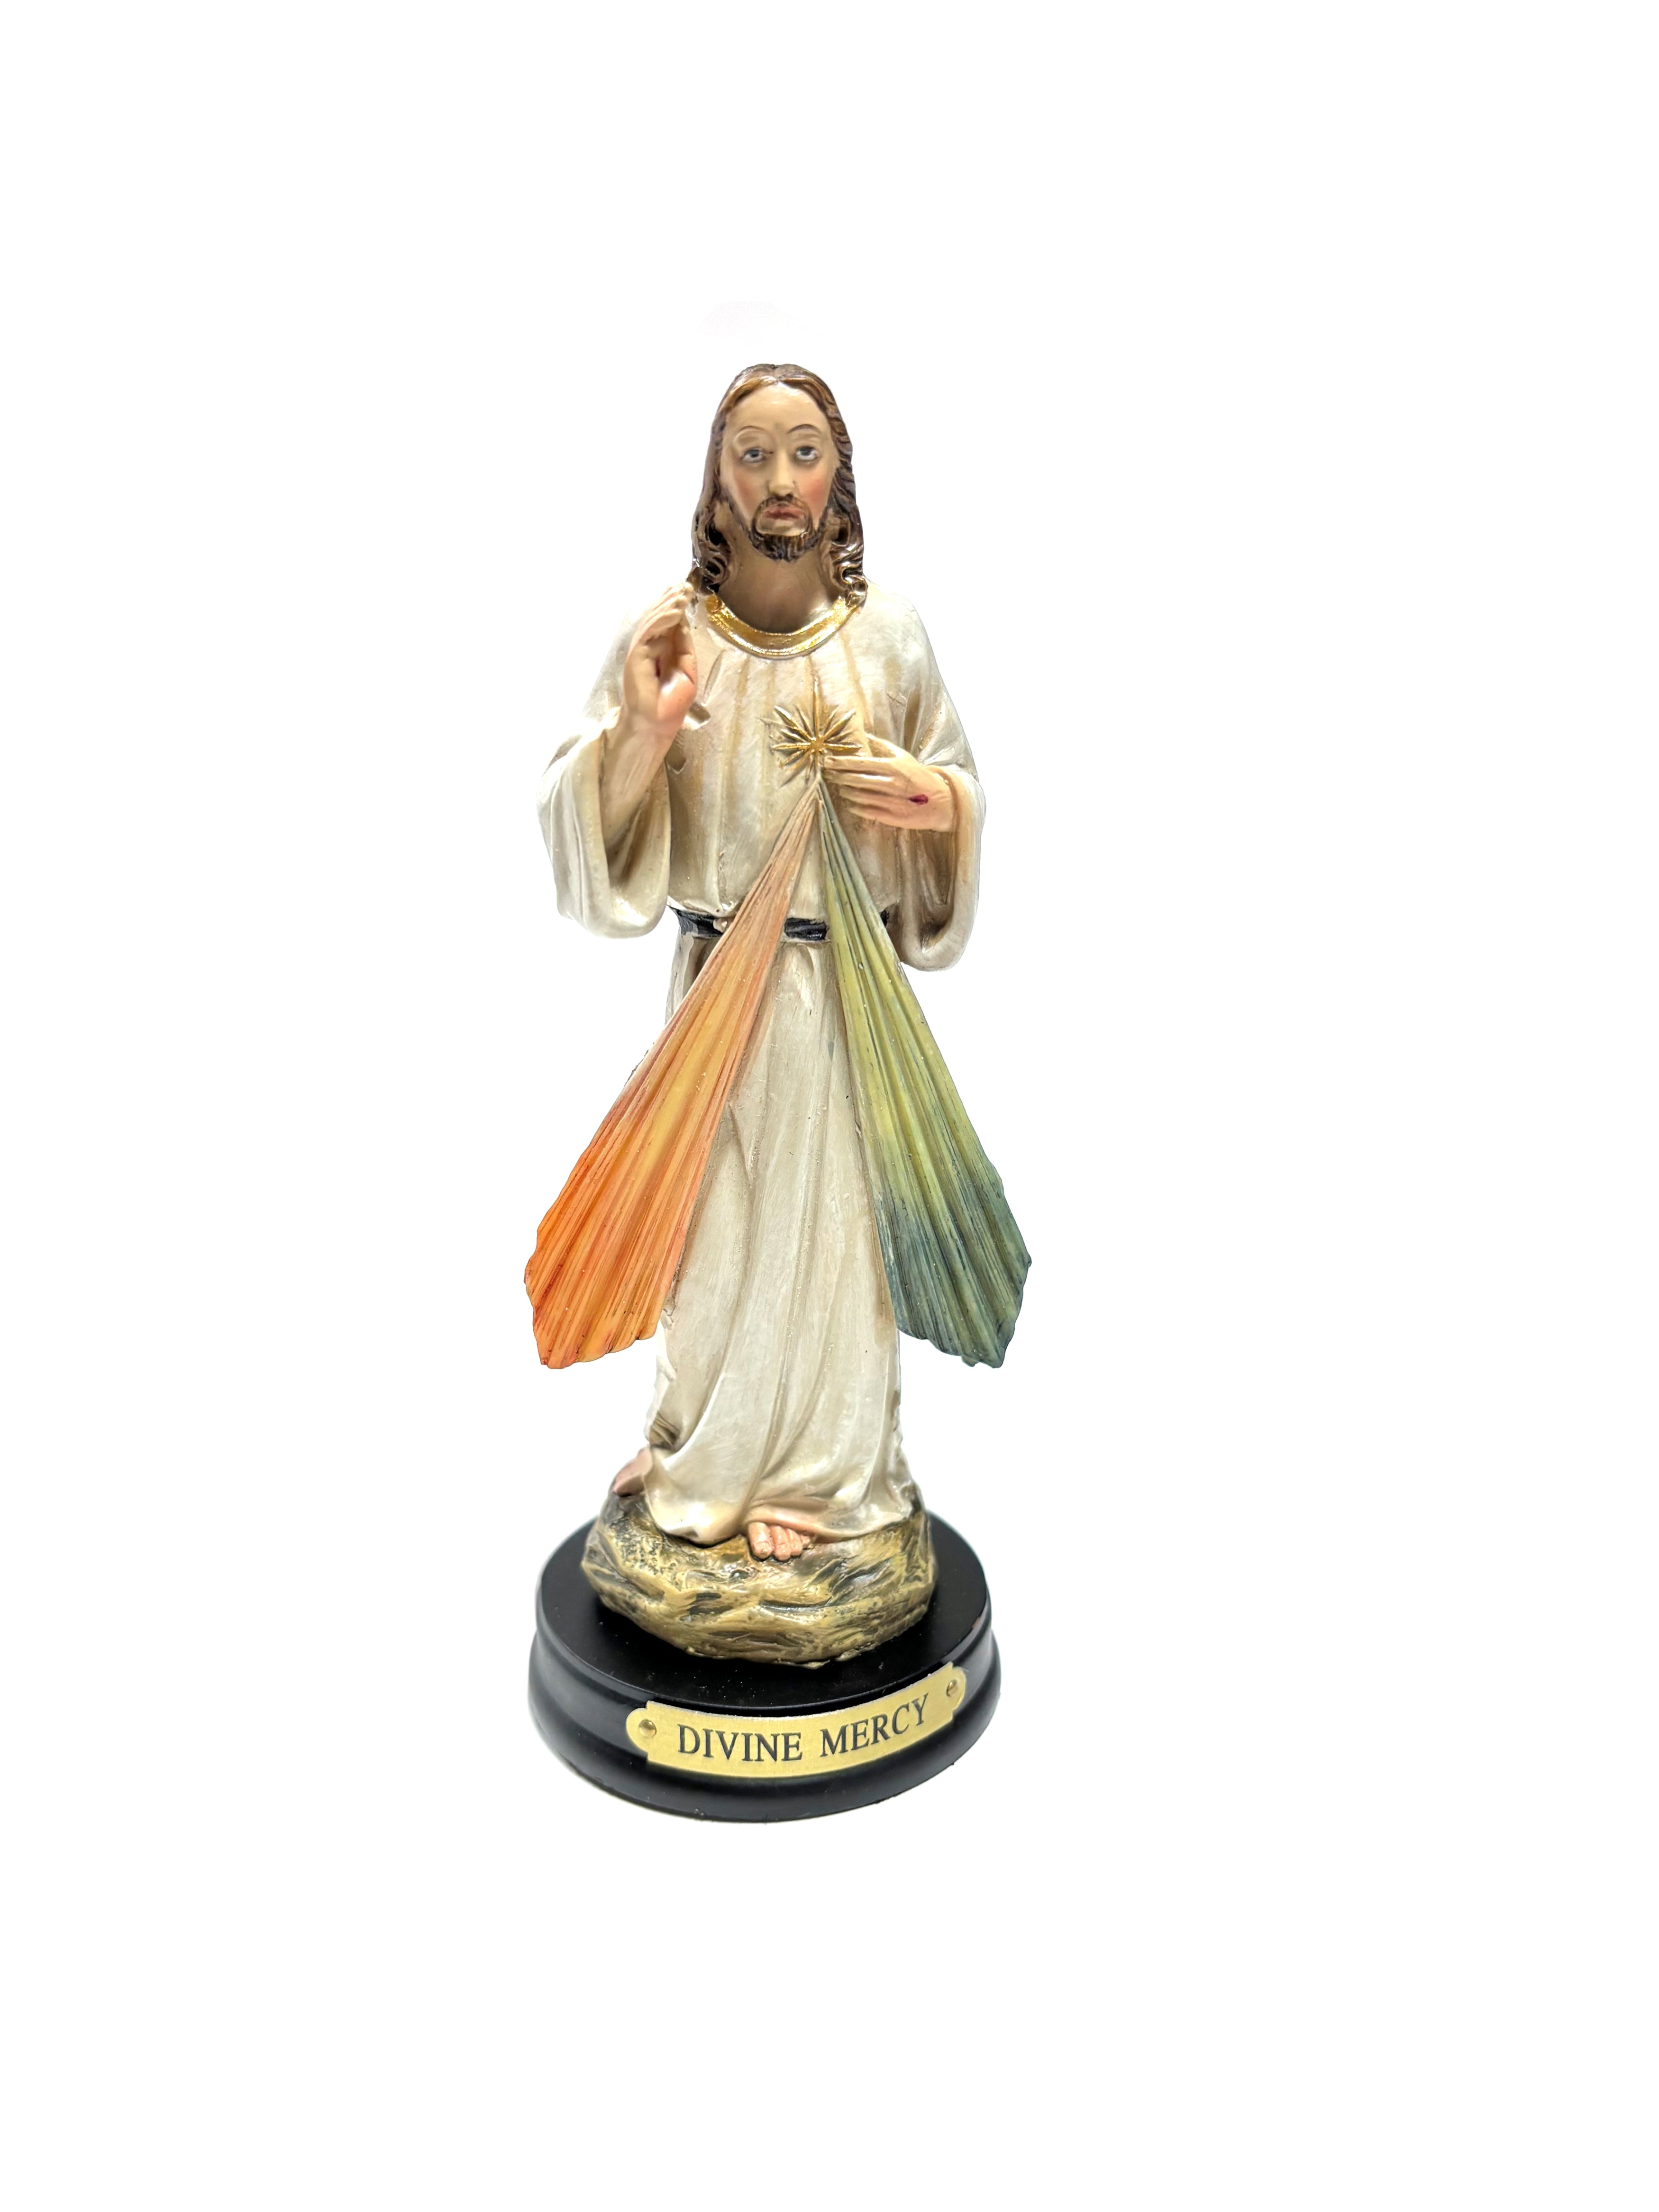 Religious statue of Divine Mercy 5" height